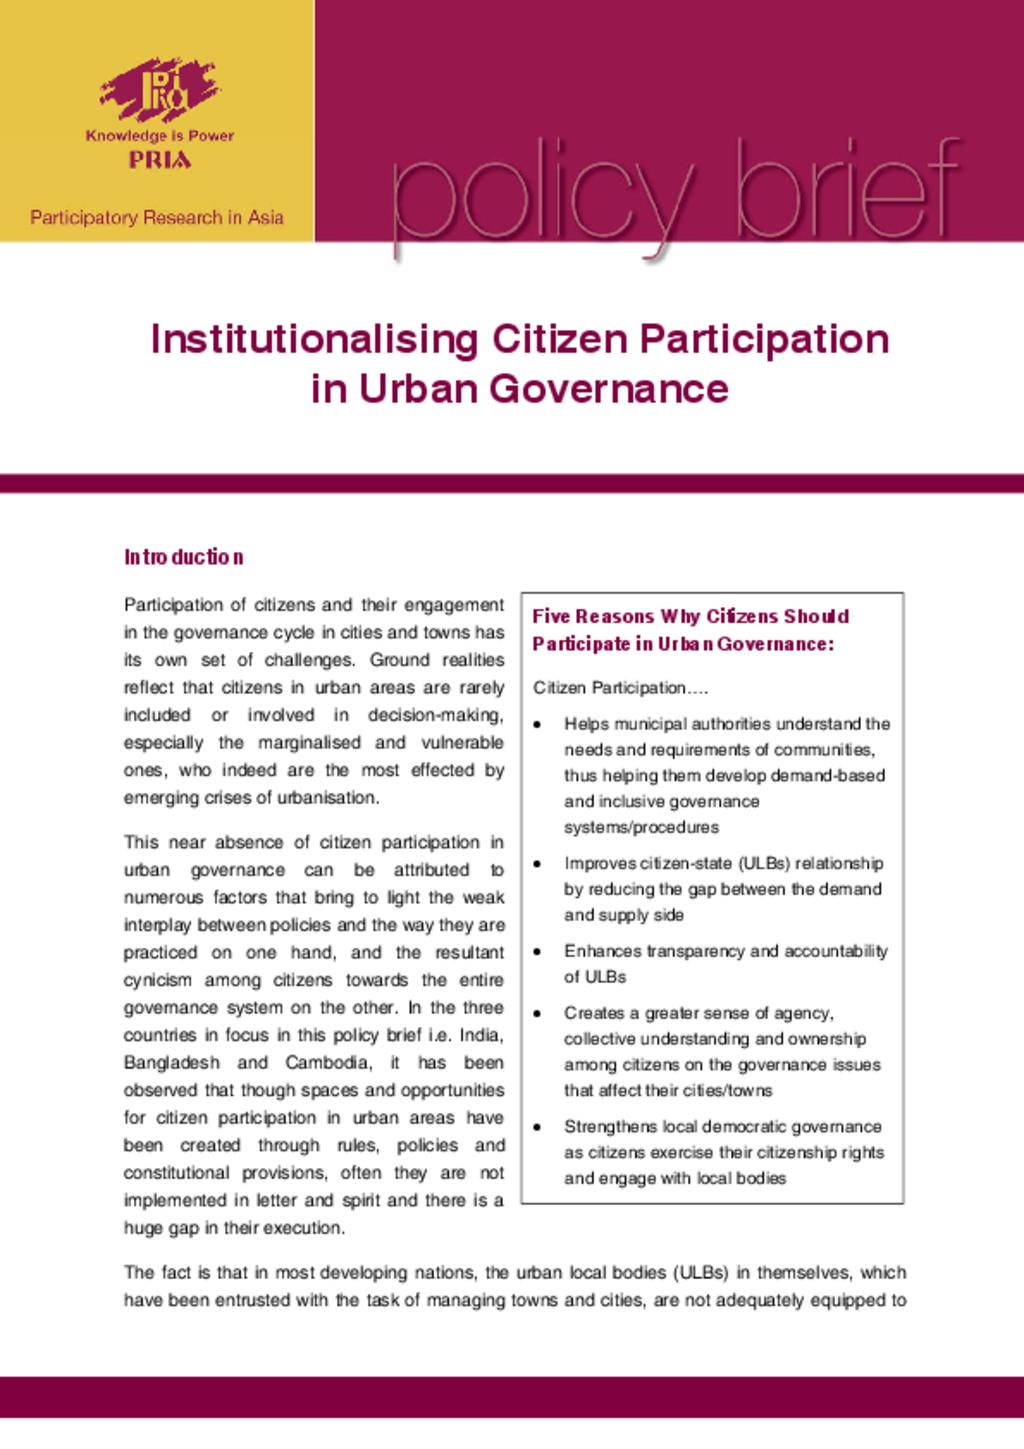 Institutionalising Citizen's Participation in Urban Governance